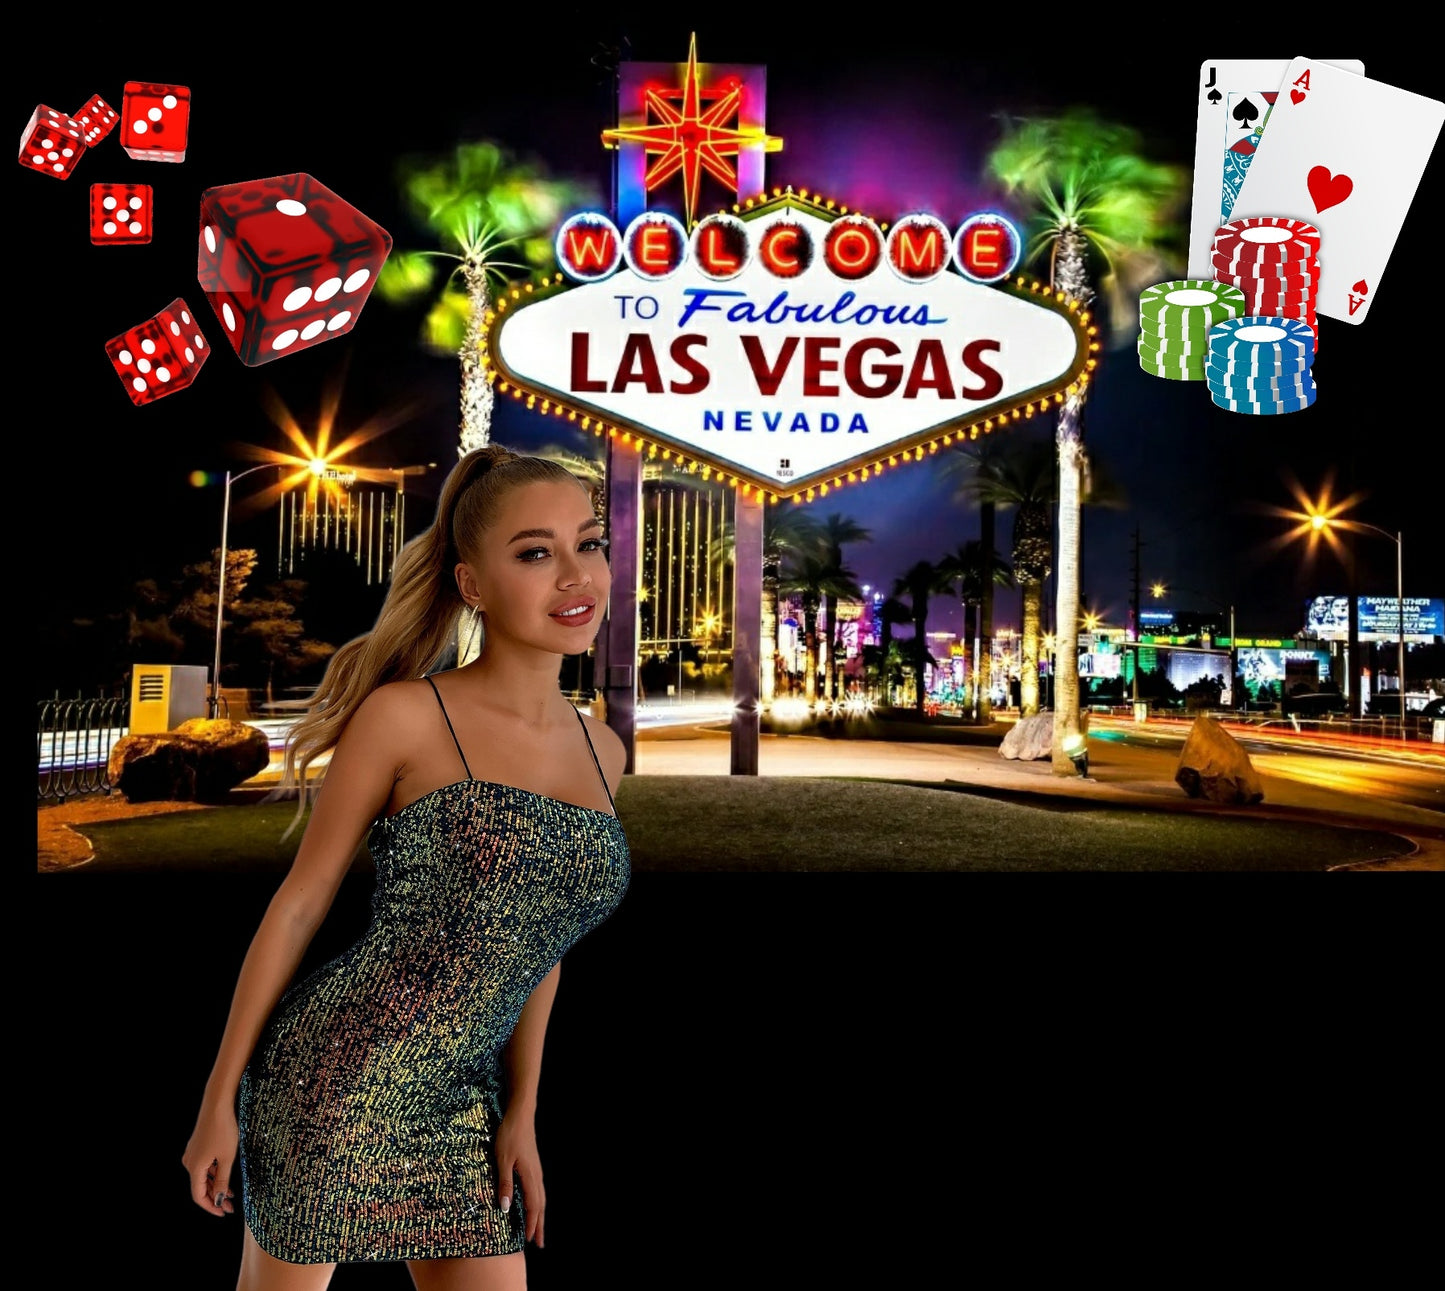 The "Viva Las Vegas" dress